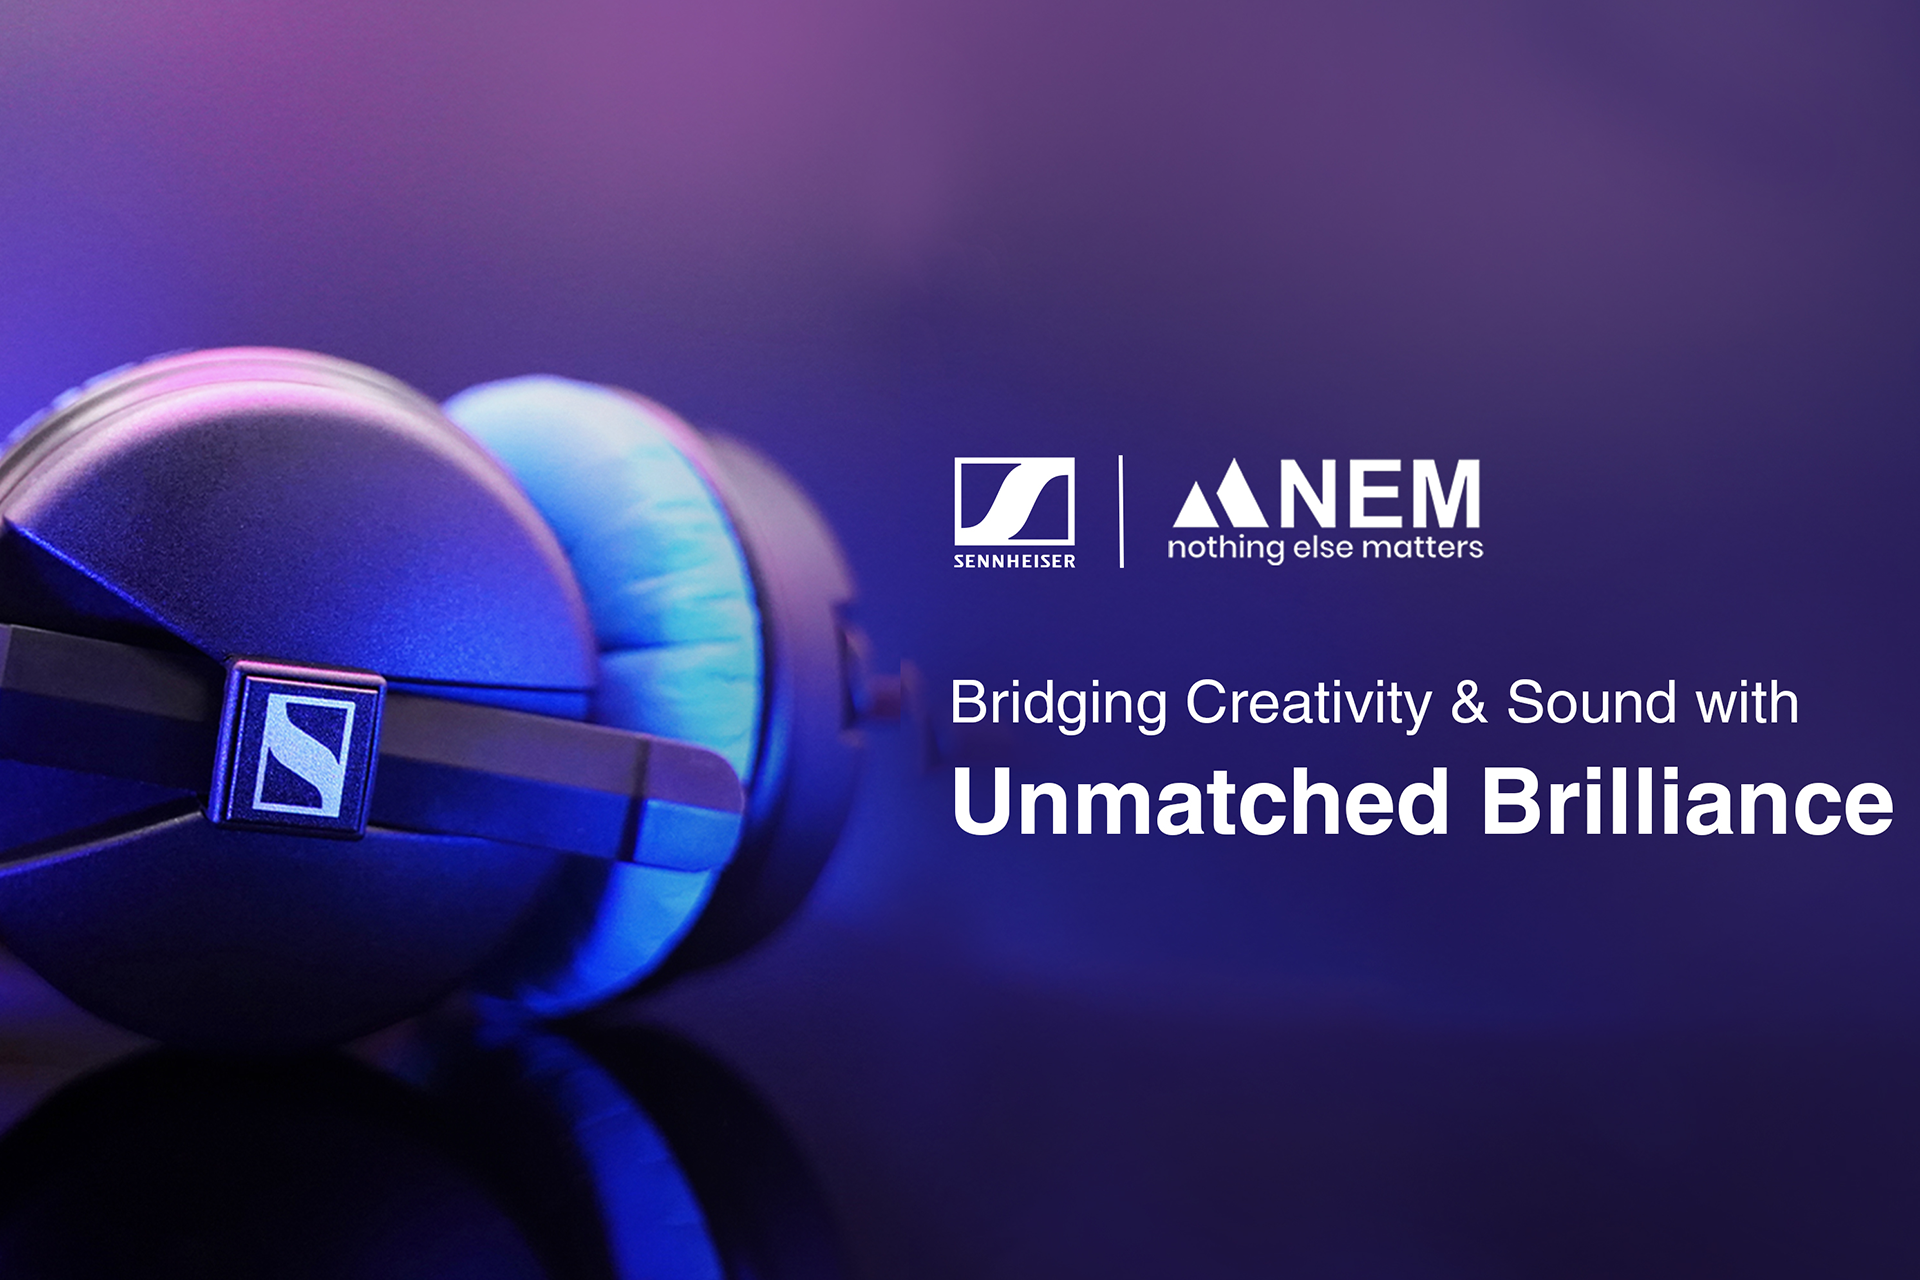 Sennheiser and NEM Digital: Bridging Creativity and Sound with Unmatched Brilliance